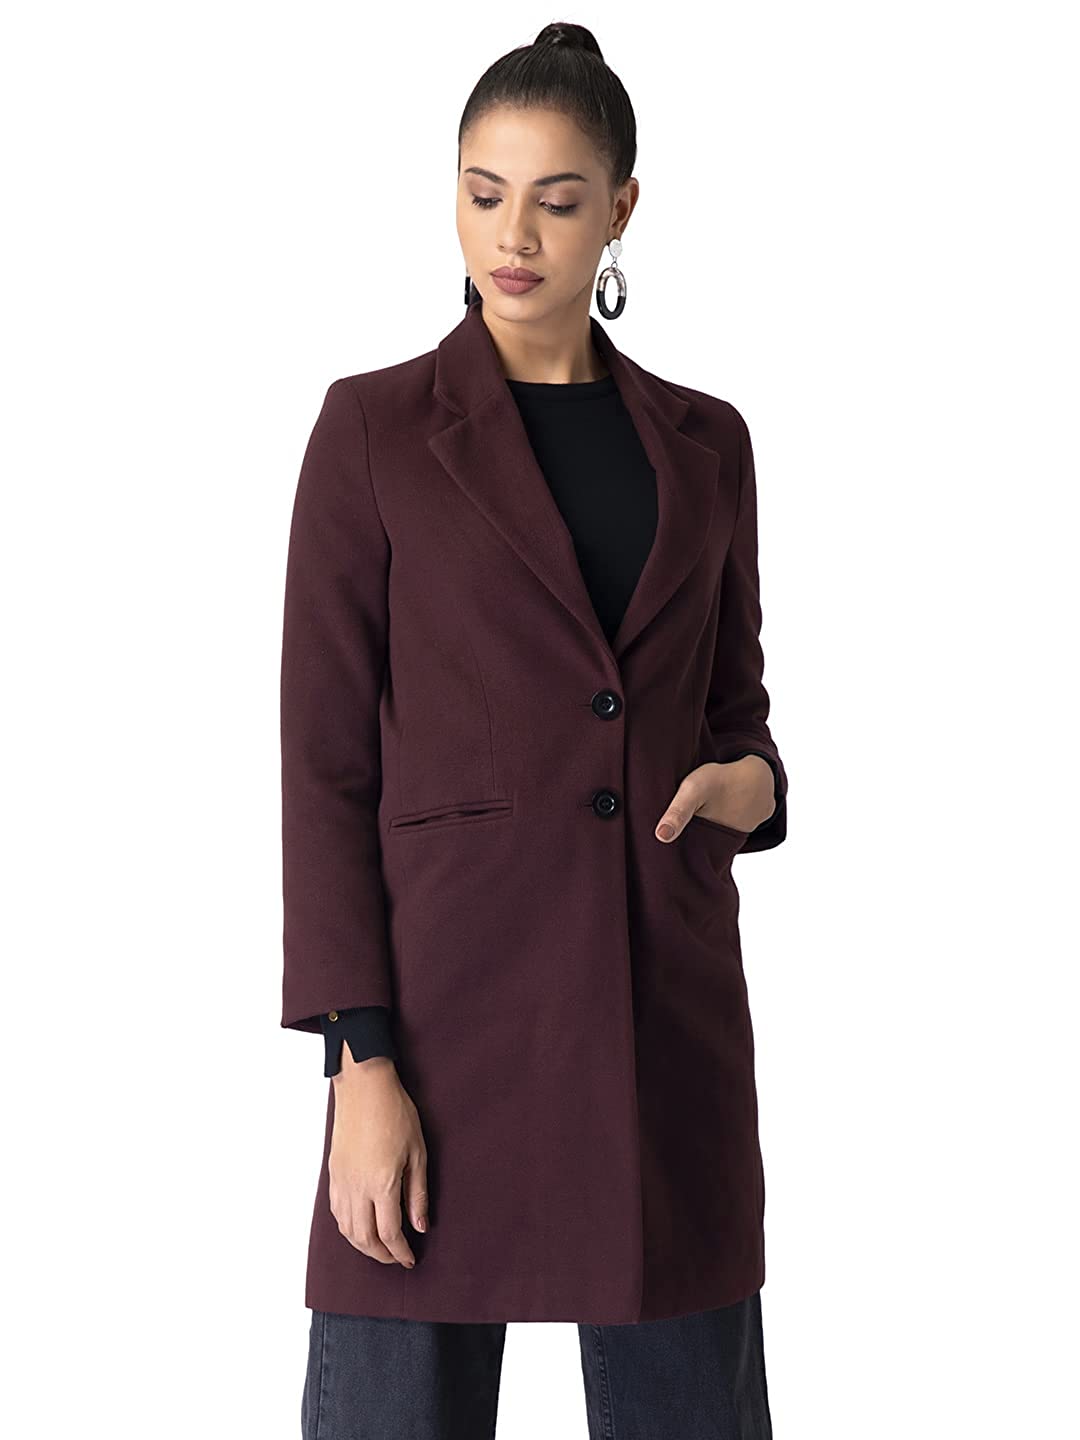 Model wearing a A-line coat